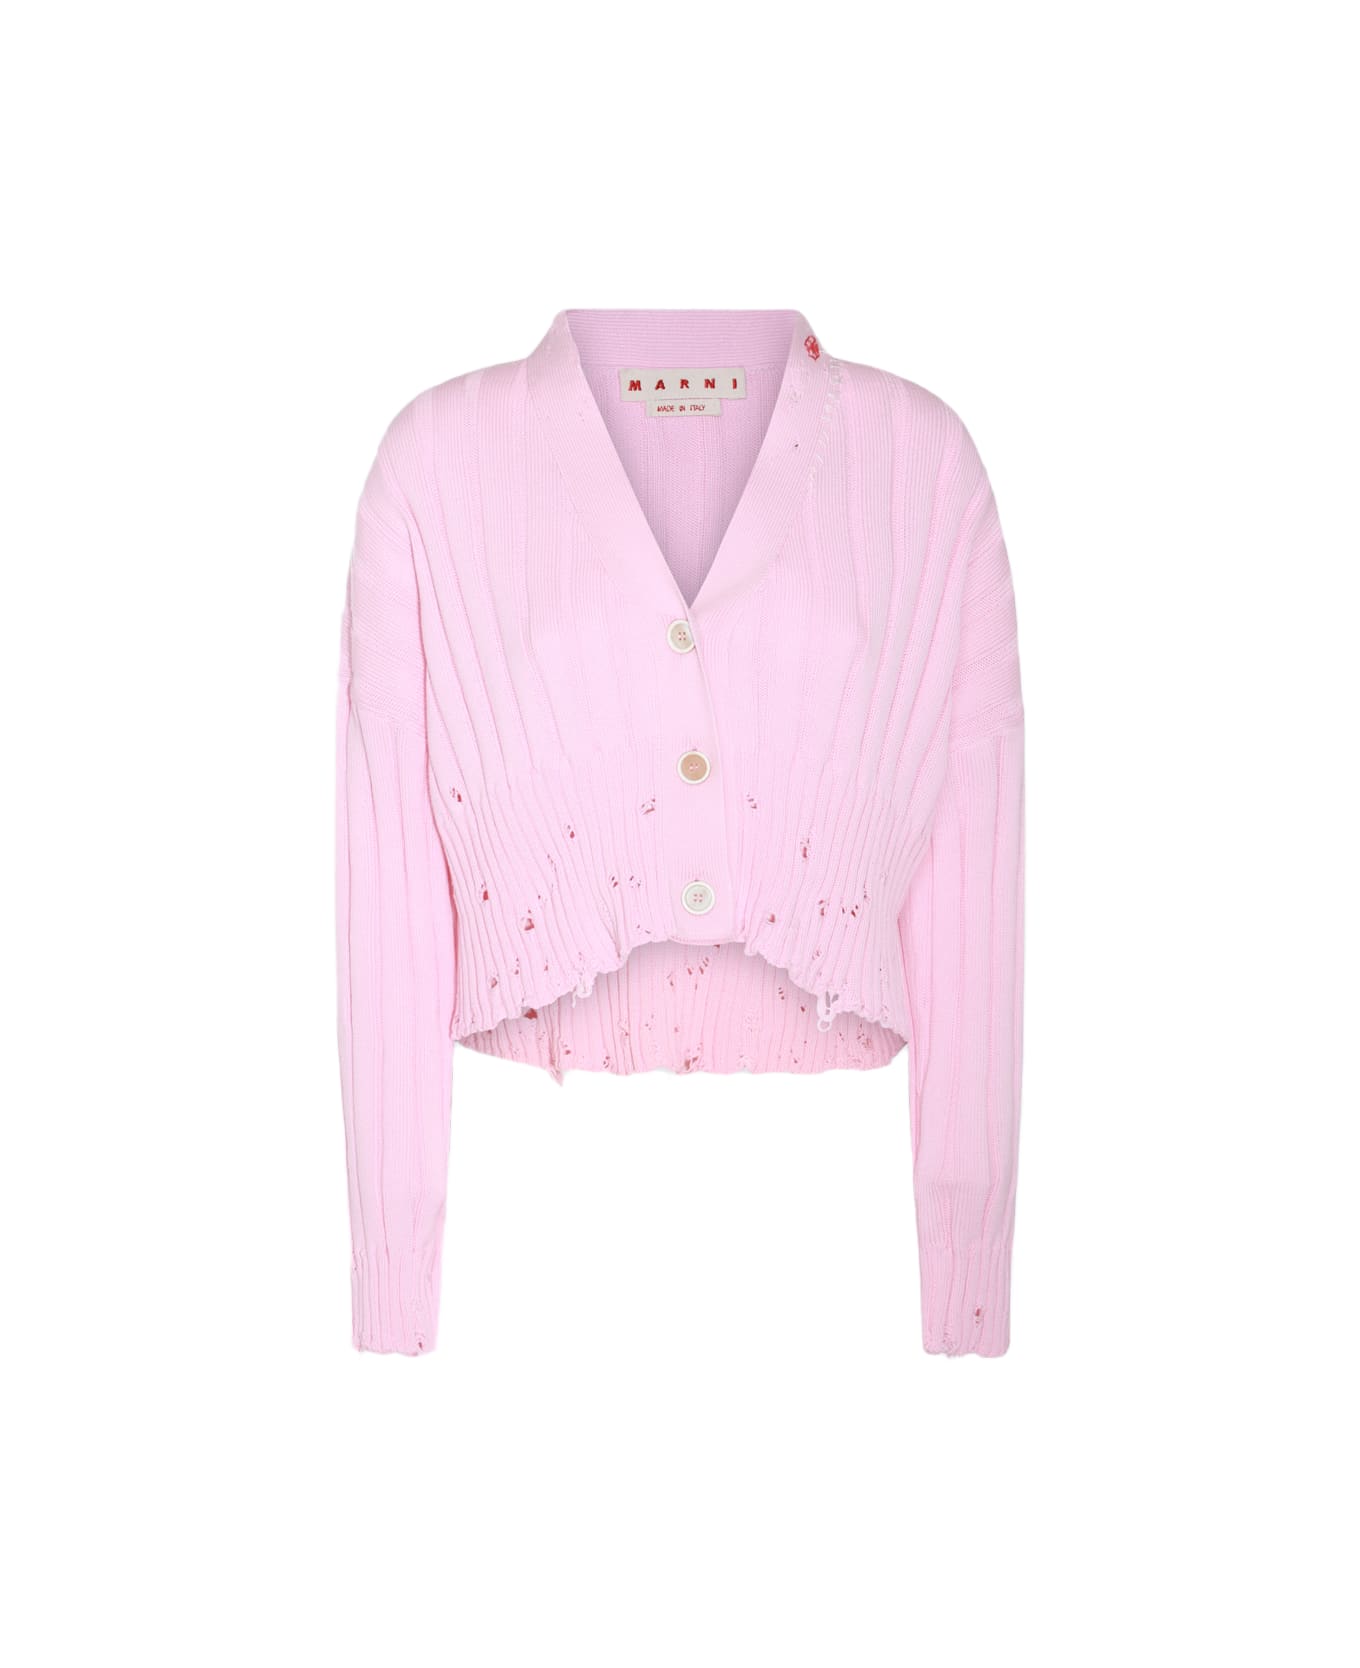 Marni Pink Cotton Knitwear - PINK GUMMY